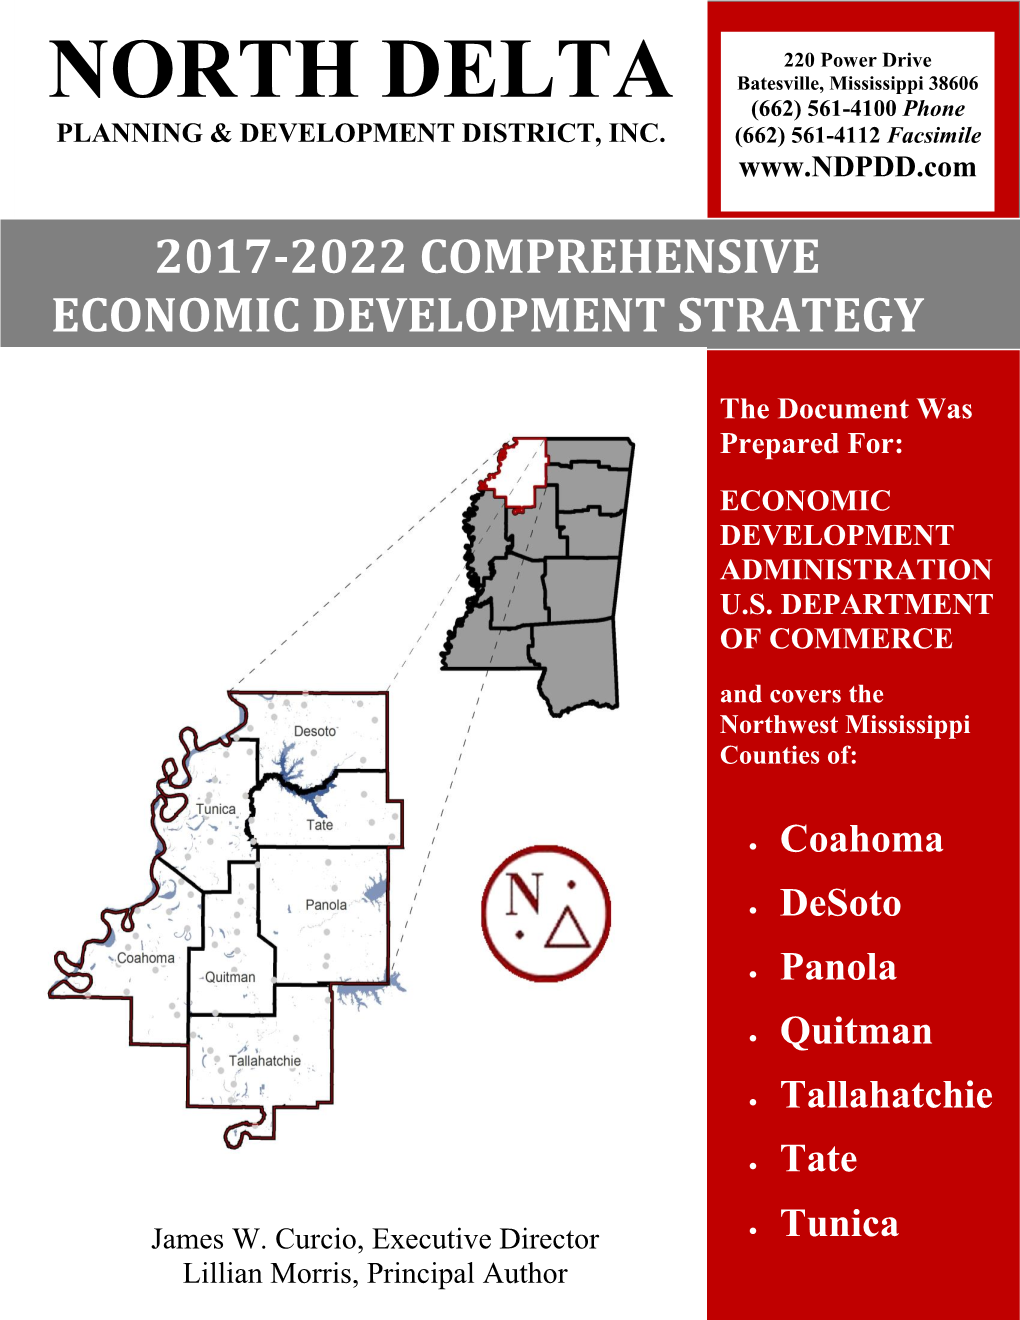 North Delta Planning and Development District, Inc